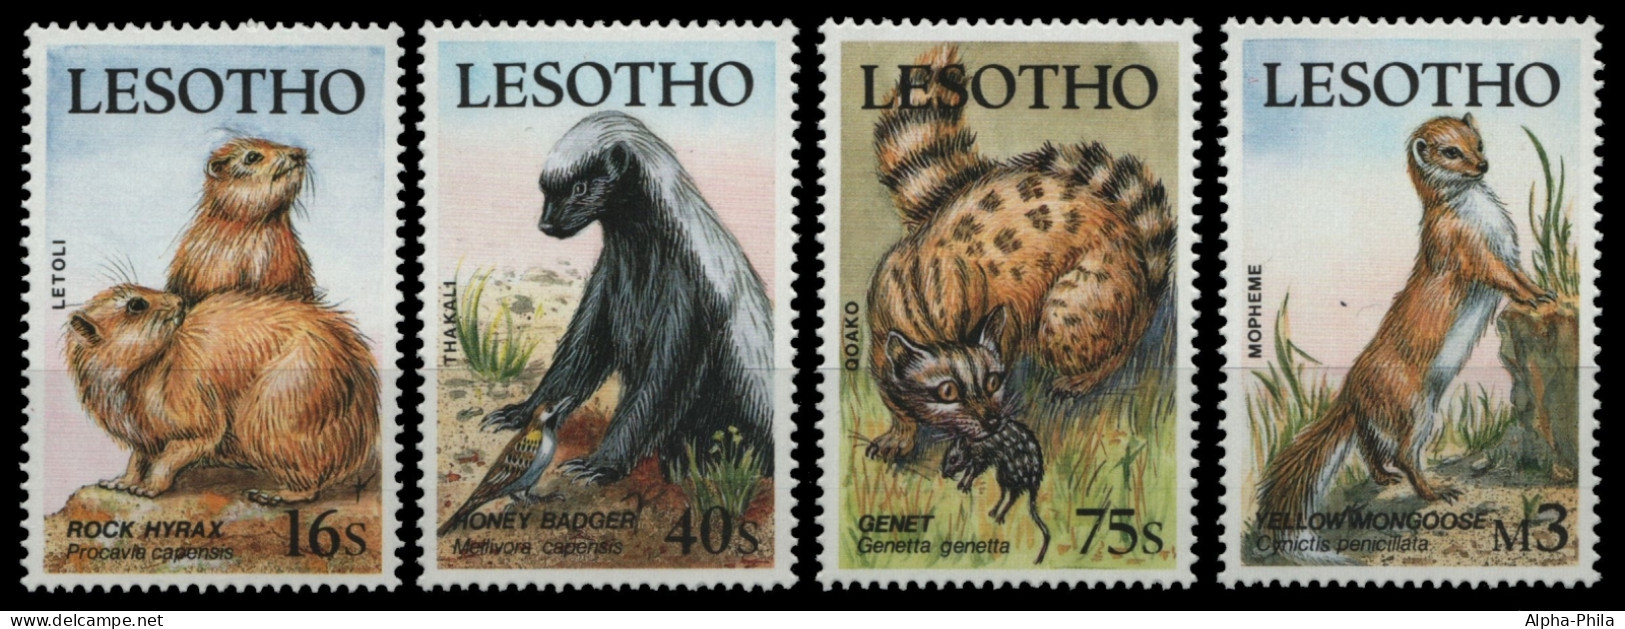 Lesotho 1988 - Mi-Nr. 712-715 ** - MNH - Wildtiere / Wild Animals - Lesotho (1966-...)